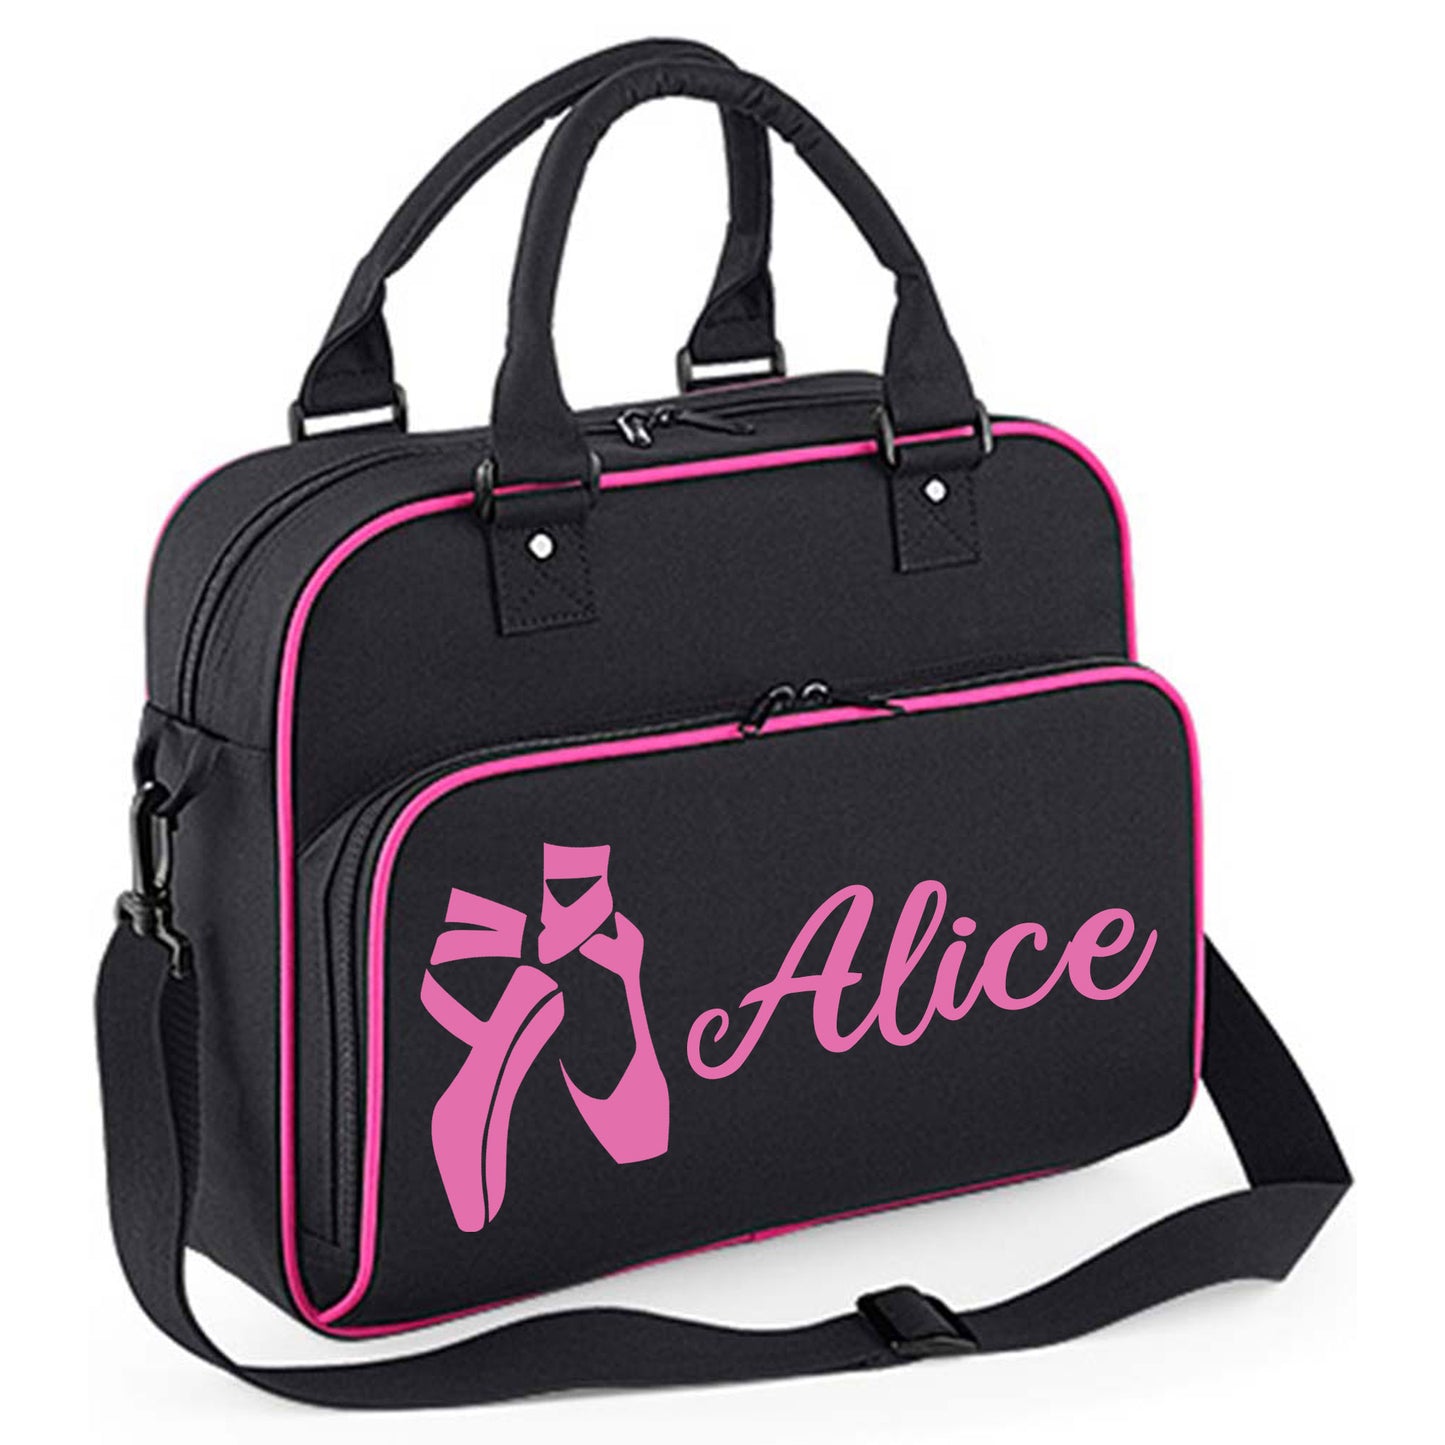 Personalised Dance Bag Kids | Girls Children's Ballet School Bag  - Always Looking Good - Black with Pink Piping Ballet Shoes 